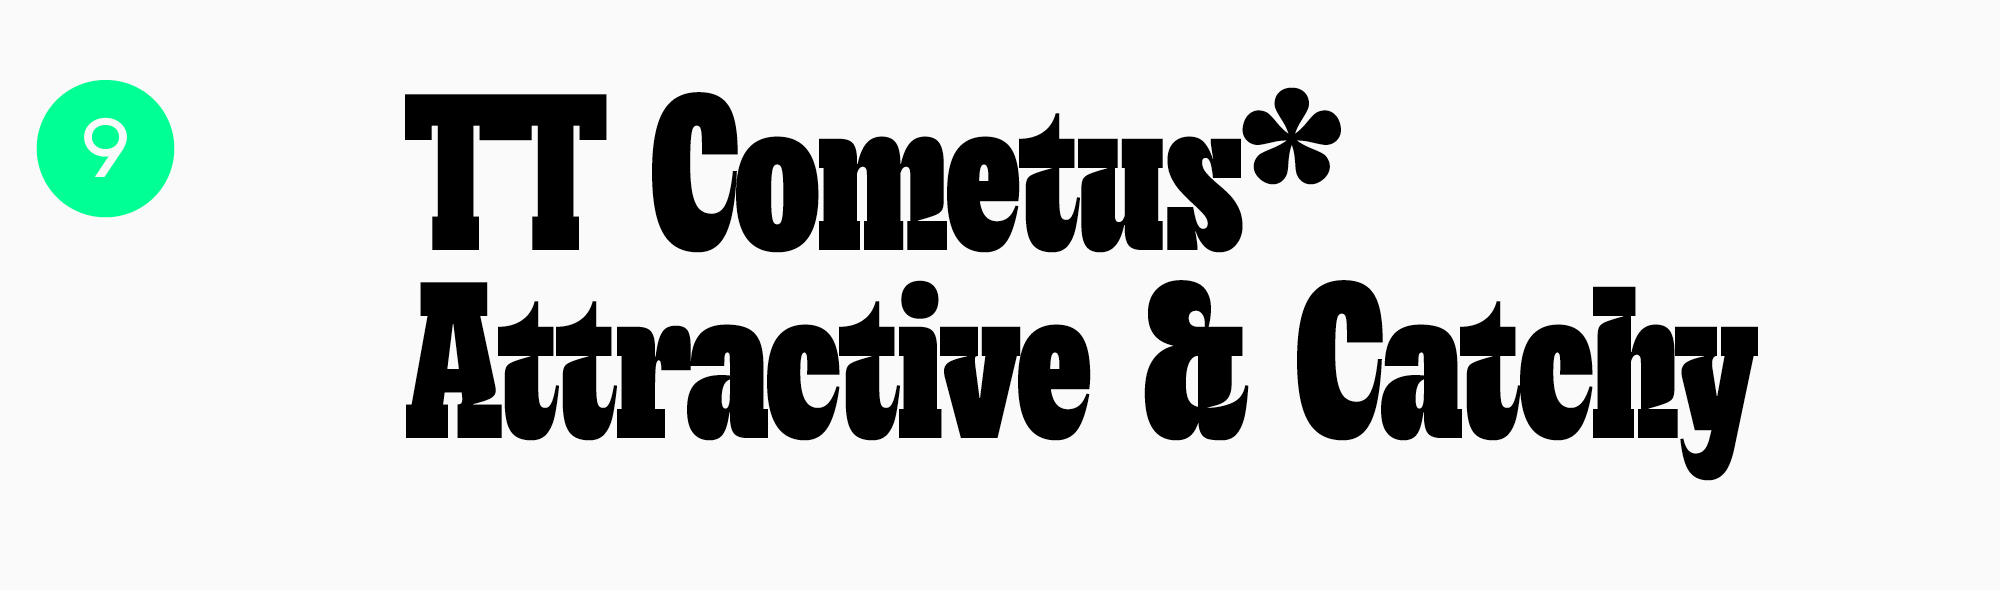 Best slab-serif fonts for logos